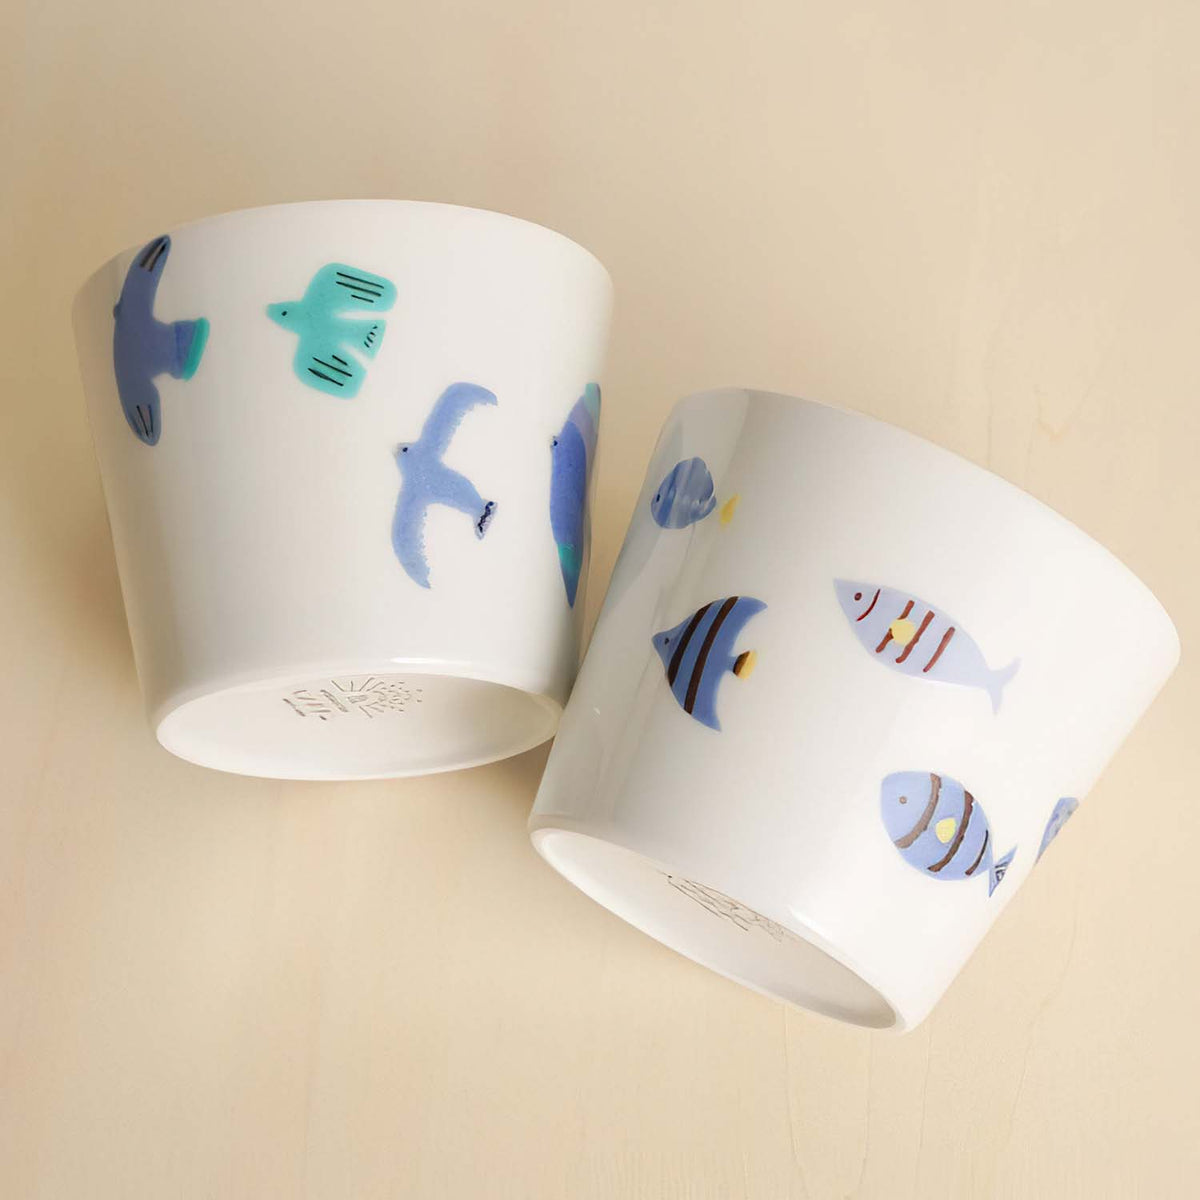 HAREKUTANI Porcelain Blue Bird Cup